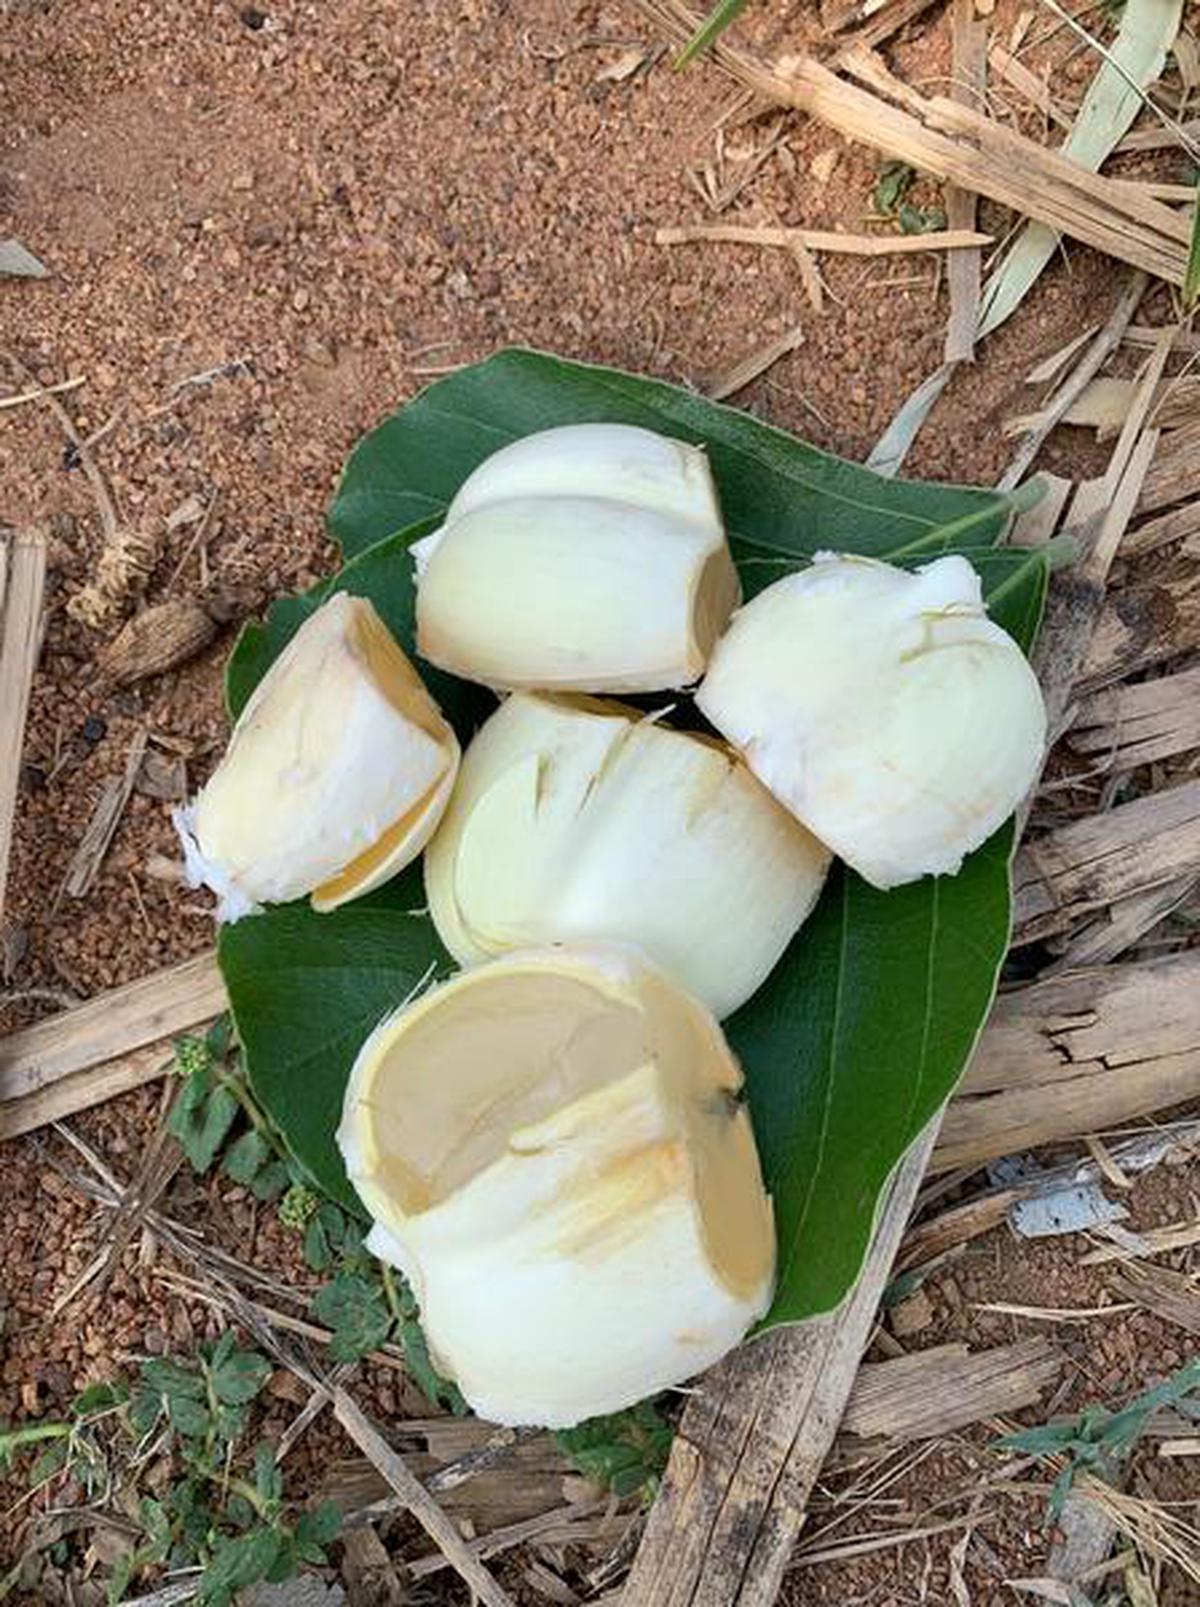 Heart of plam fruit called ‘munjal’ in Telugu